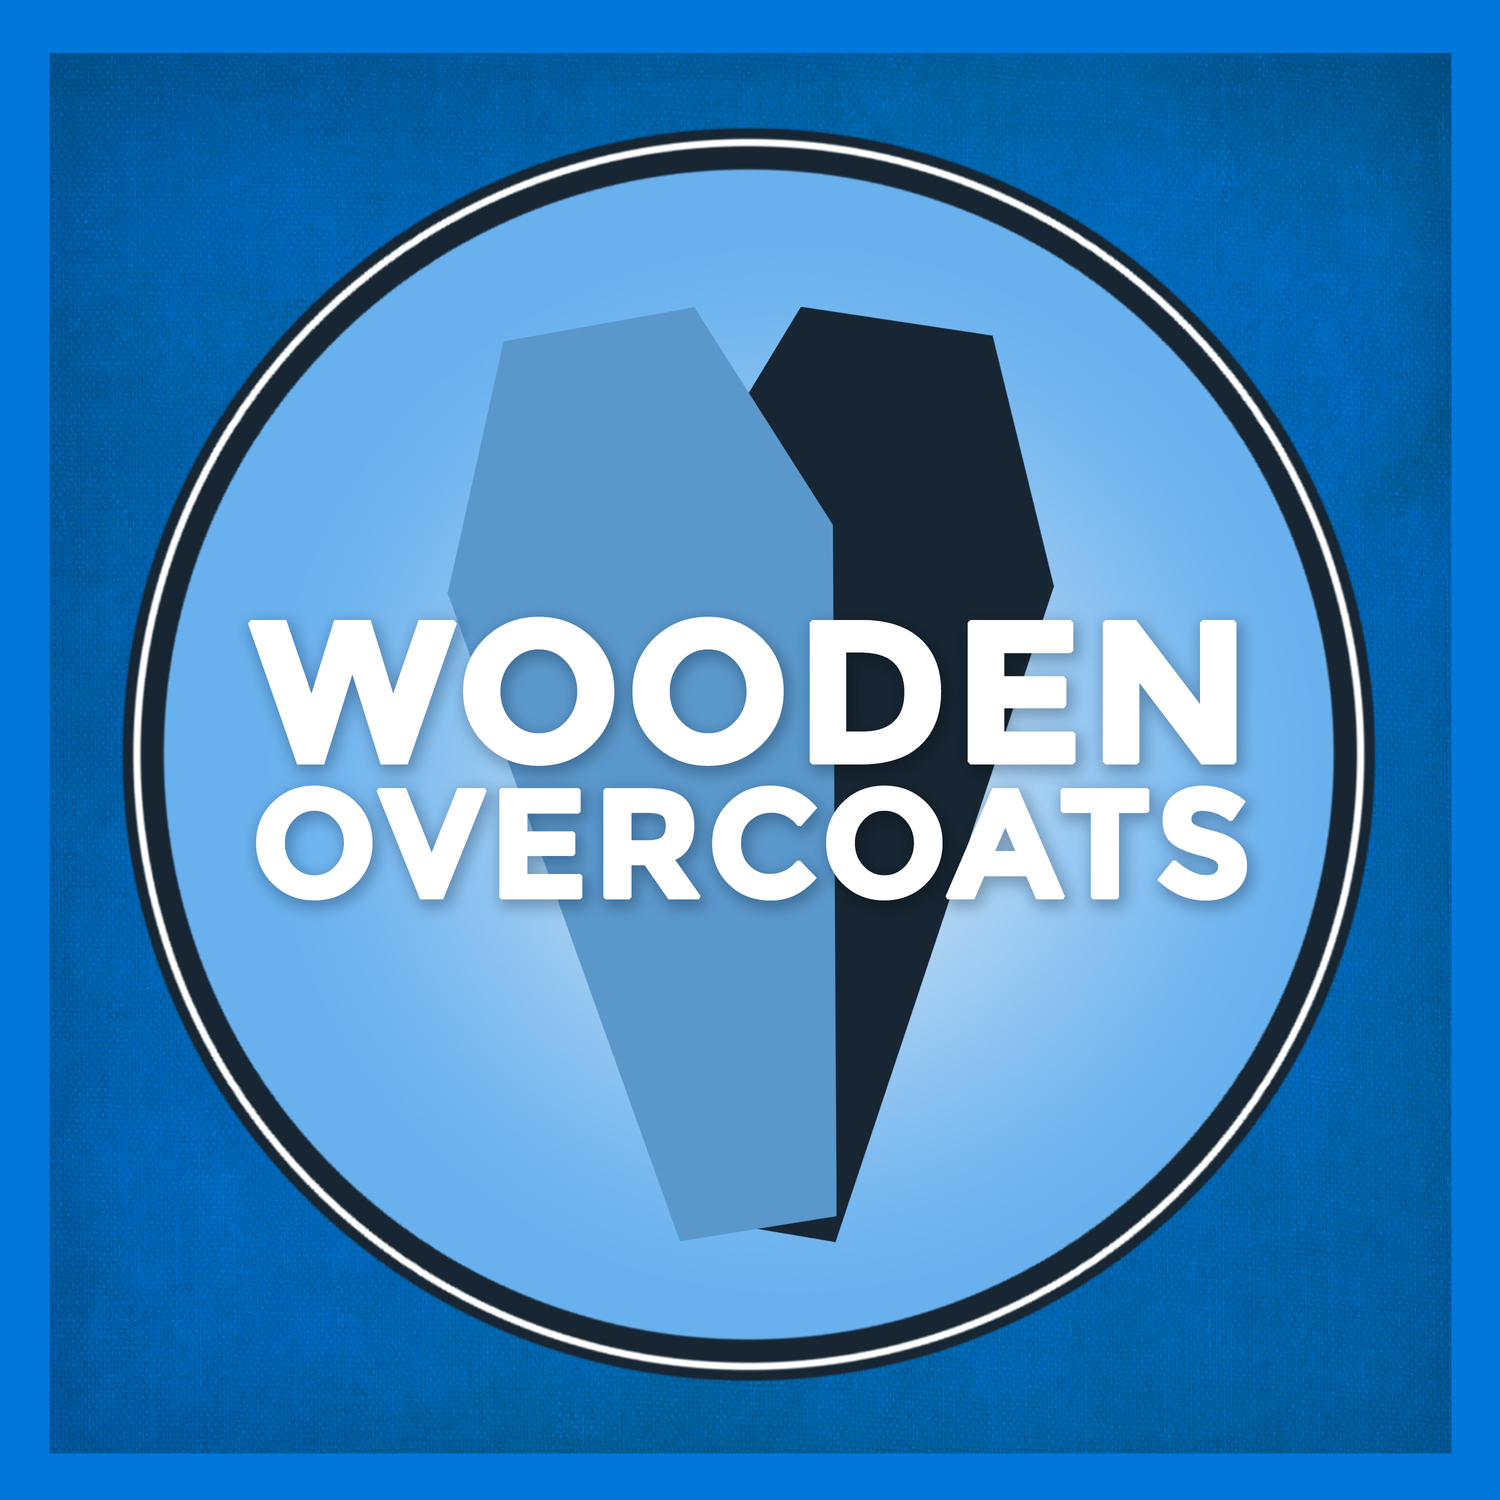 "Wooden Overcoats" Podcast